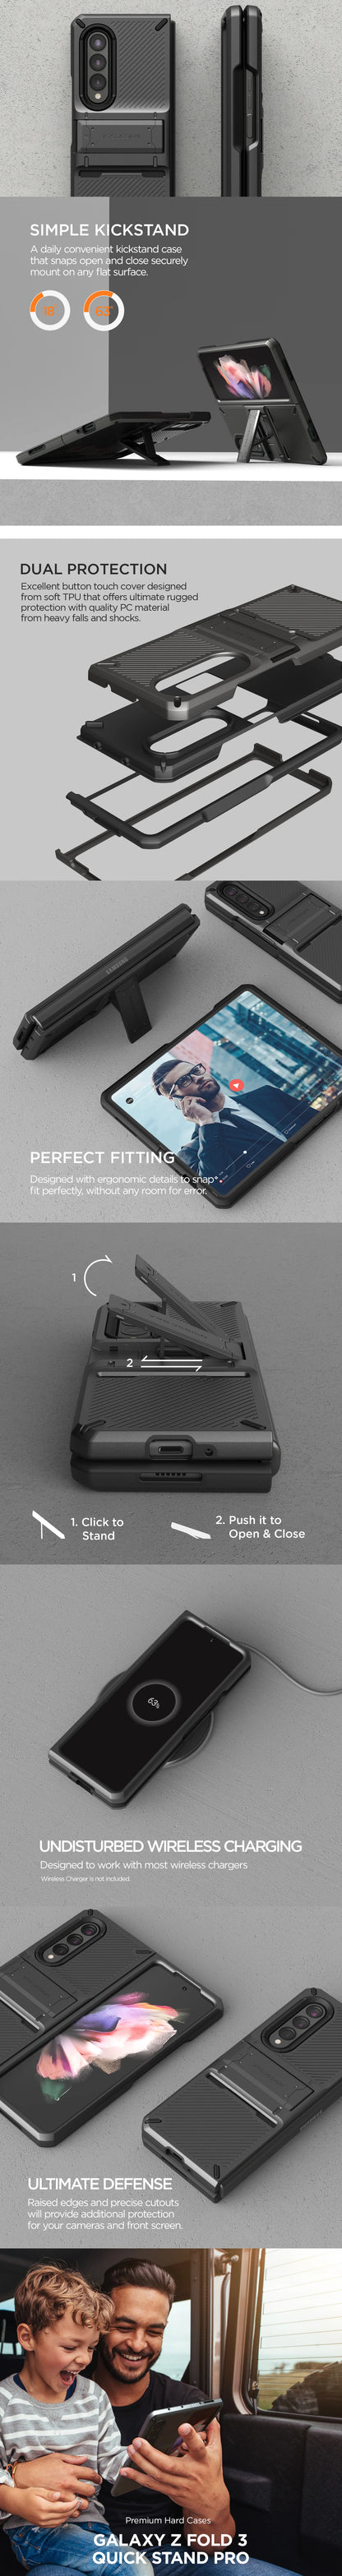 VRS Design Galaxy Z Flip 3 Case QuickStand Active - Matte Black